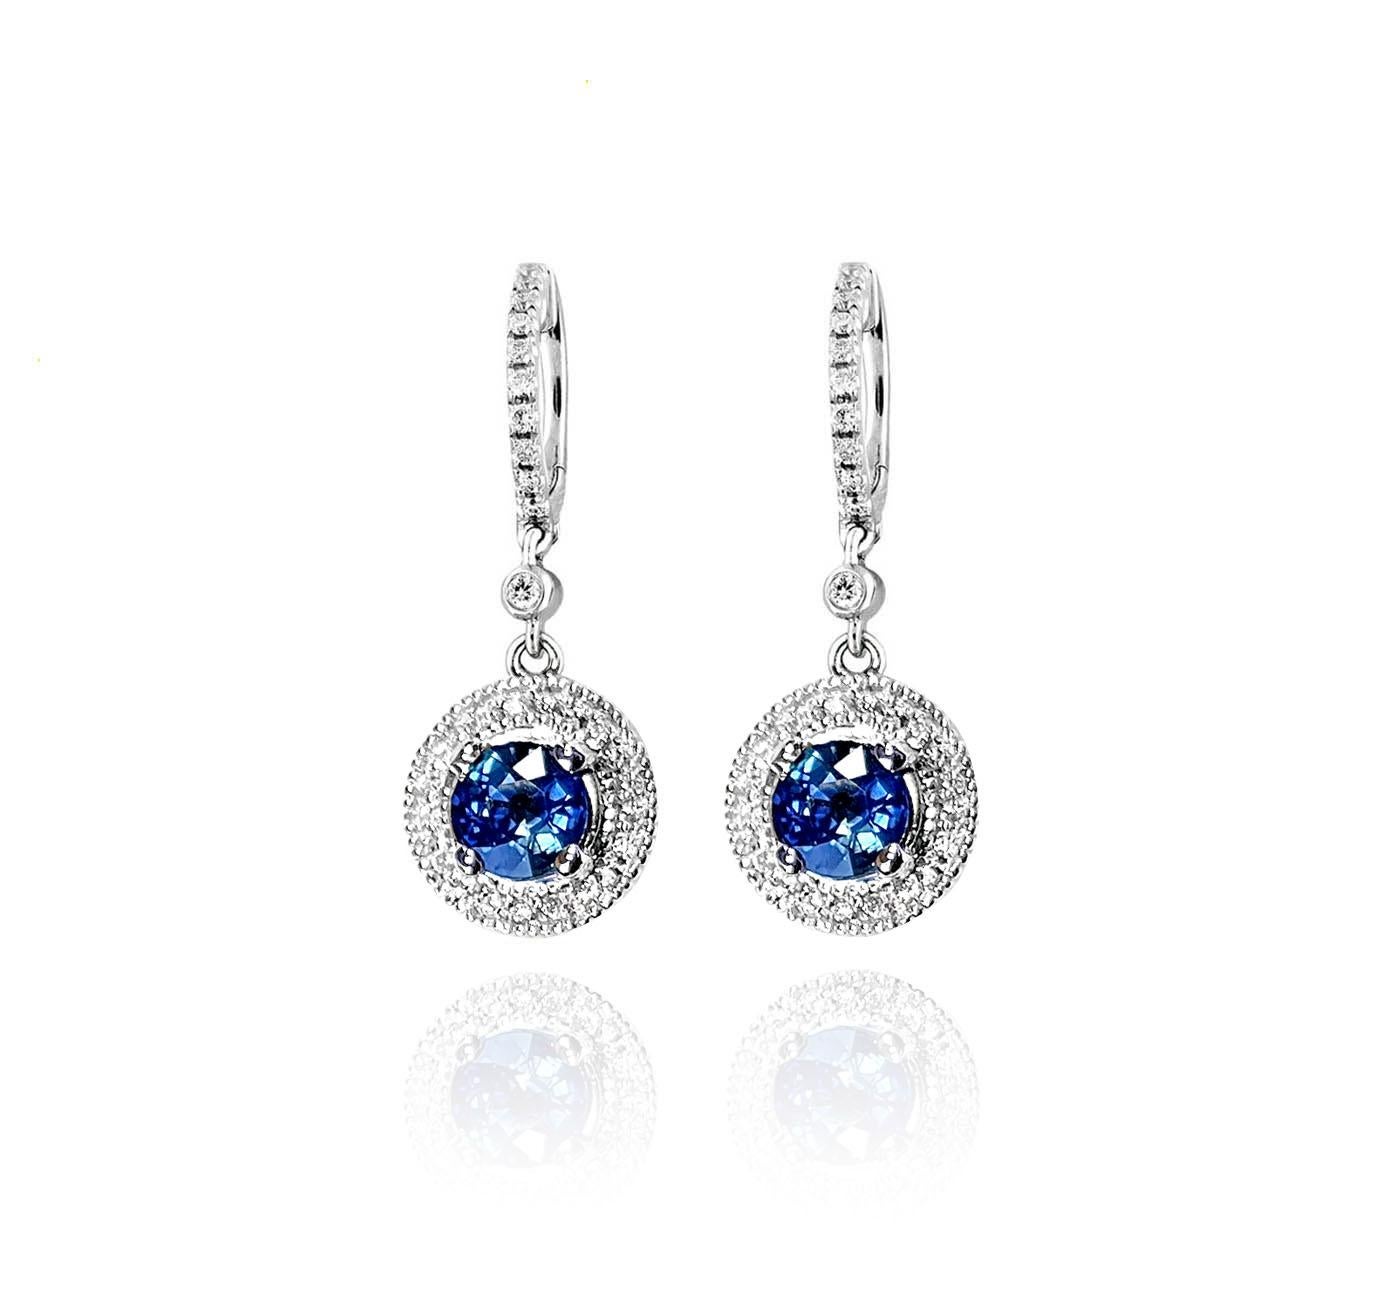 Vitolo 18 Karat Gold Diamond Drop Earrings with Blue Sapphire For Sale 1